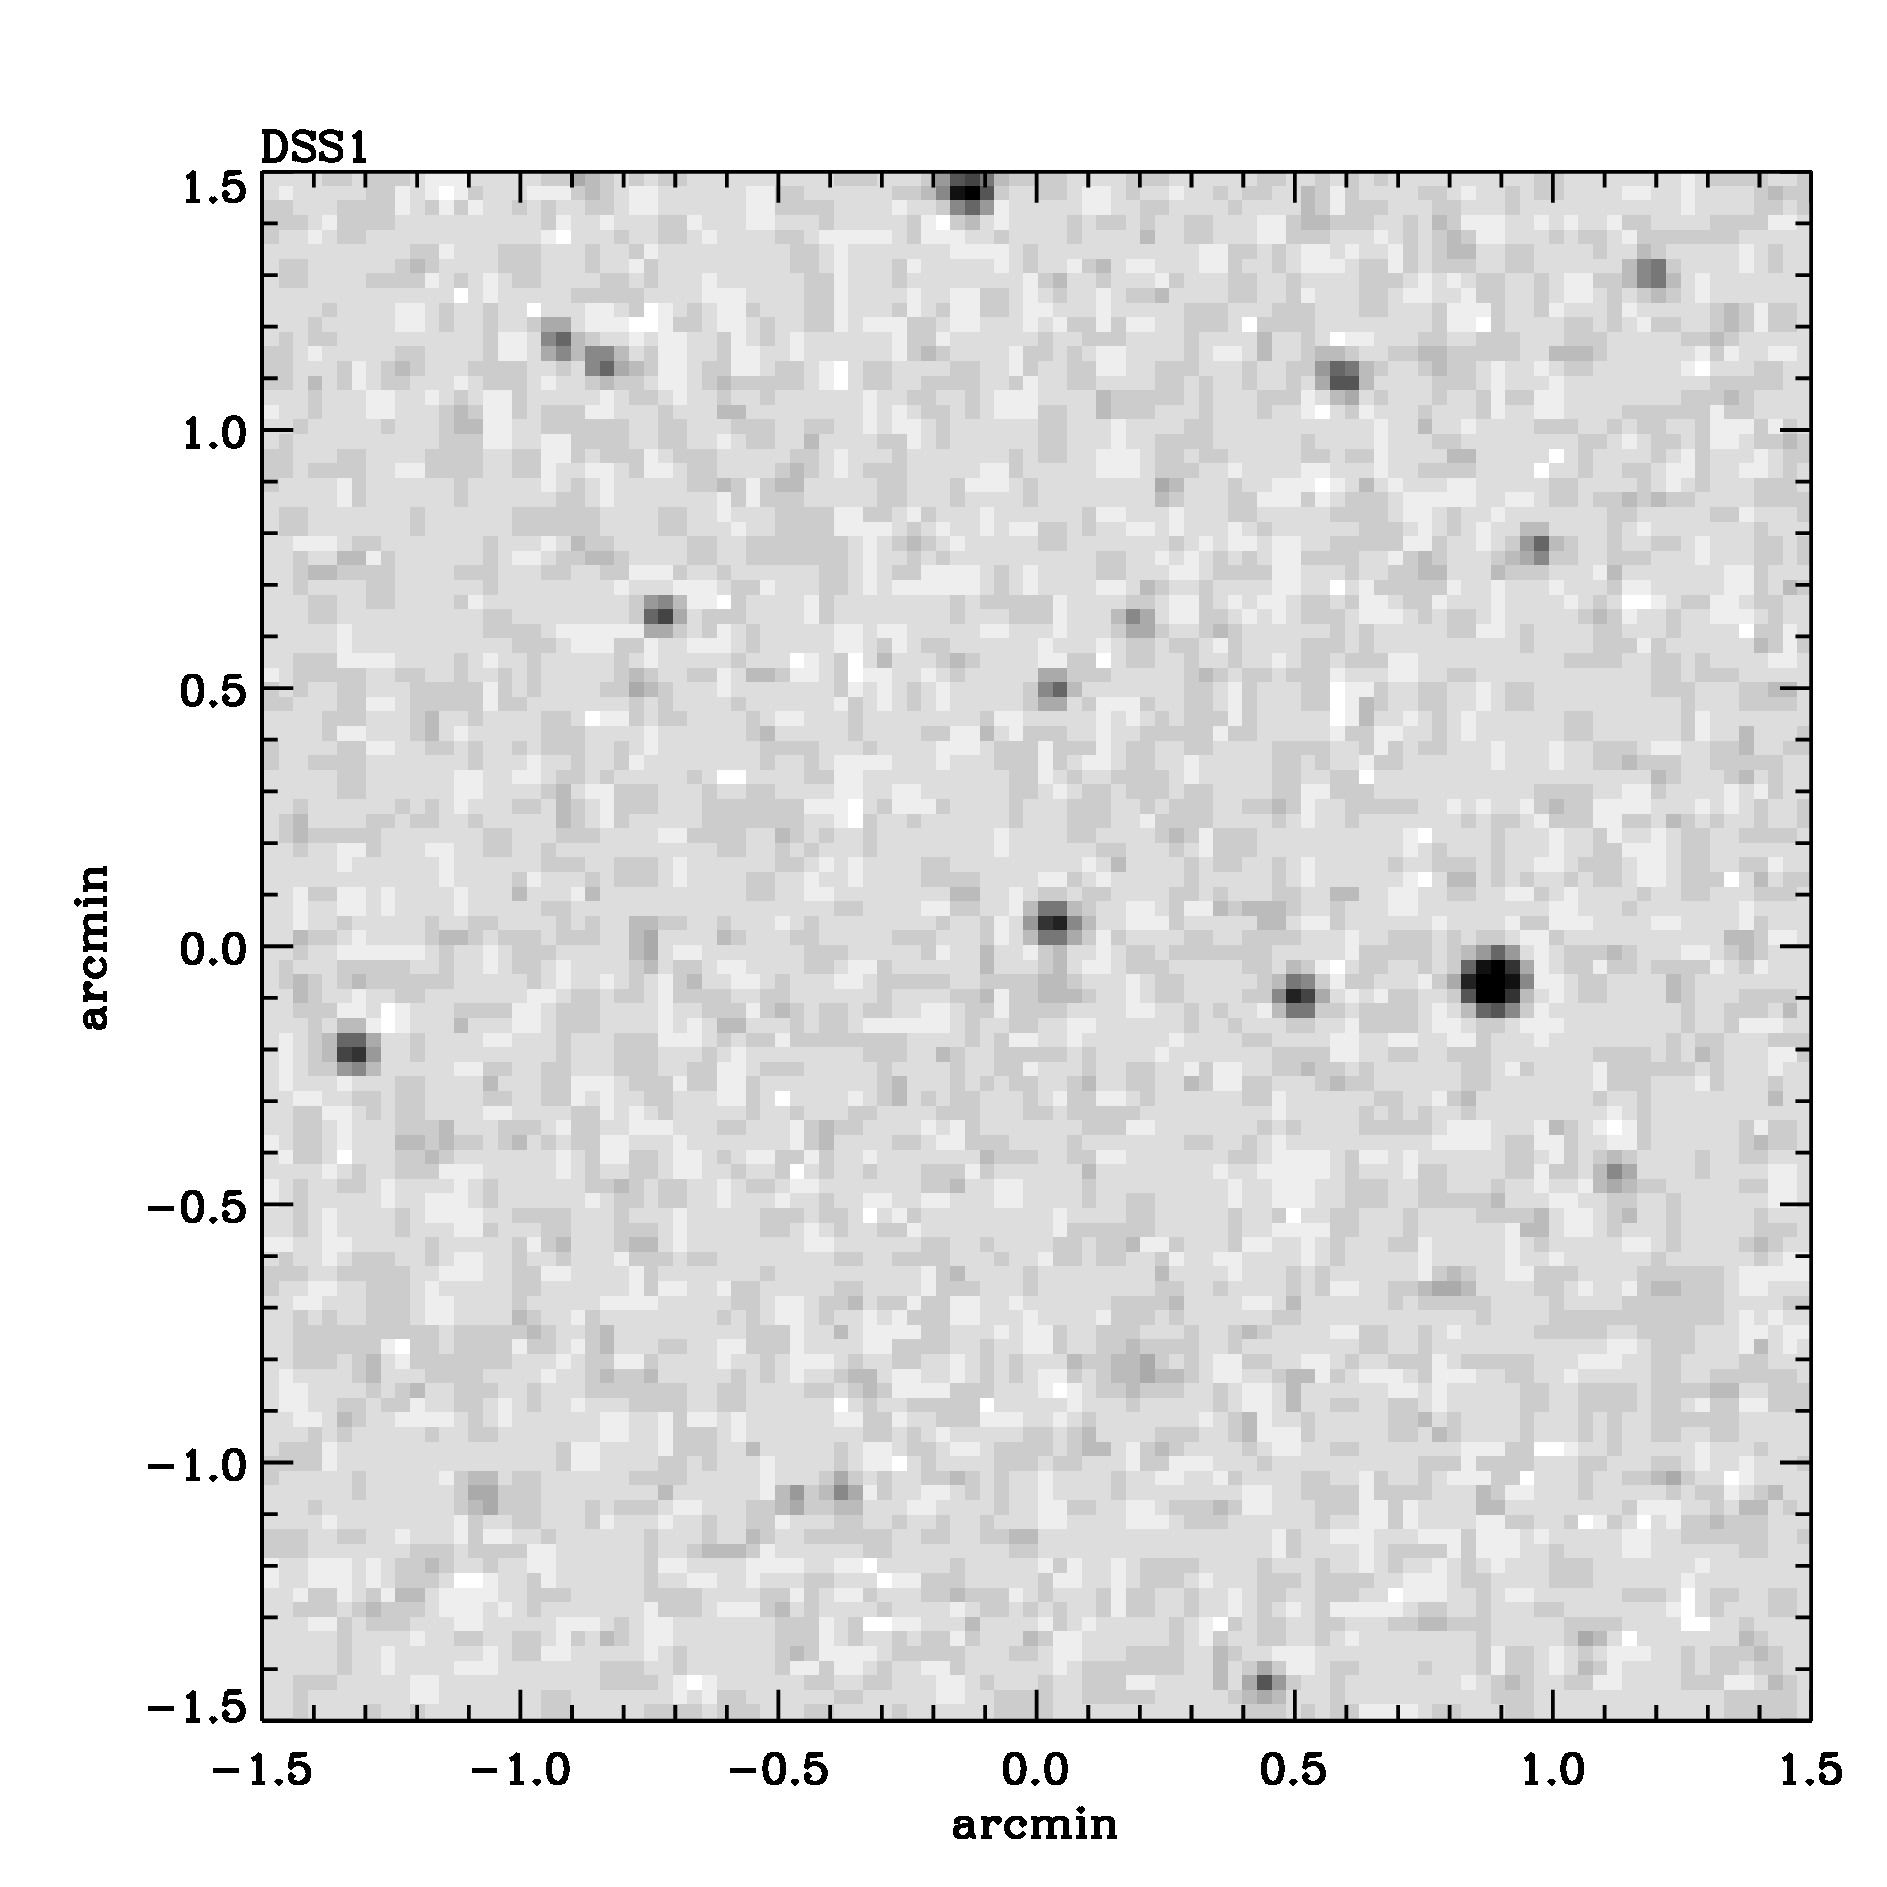 Optical image for SWIFT J0418.3+3800